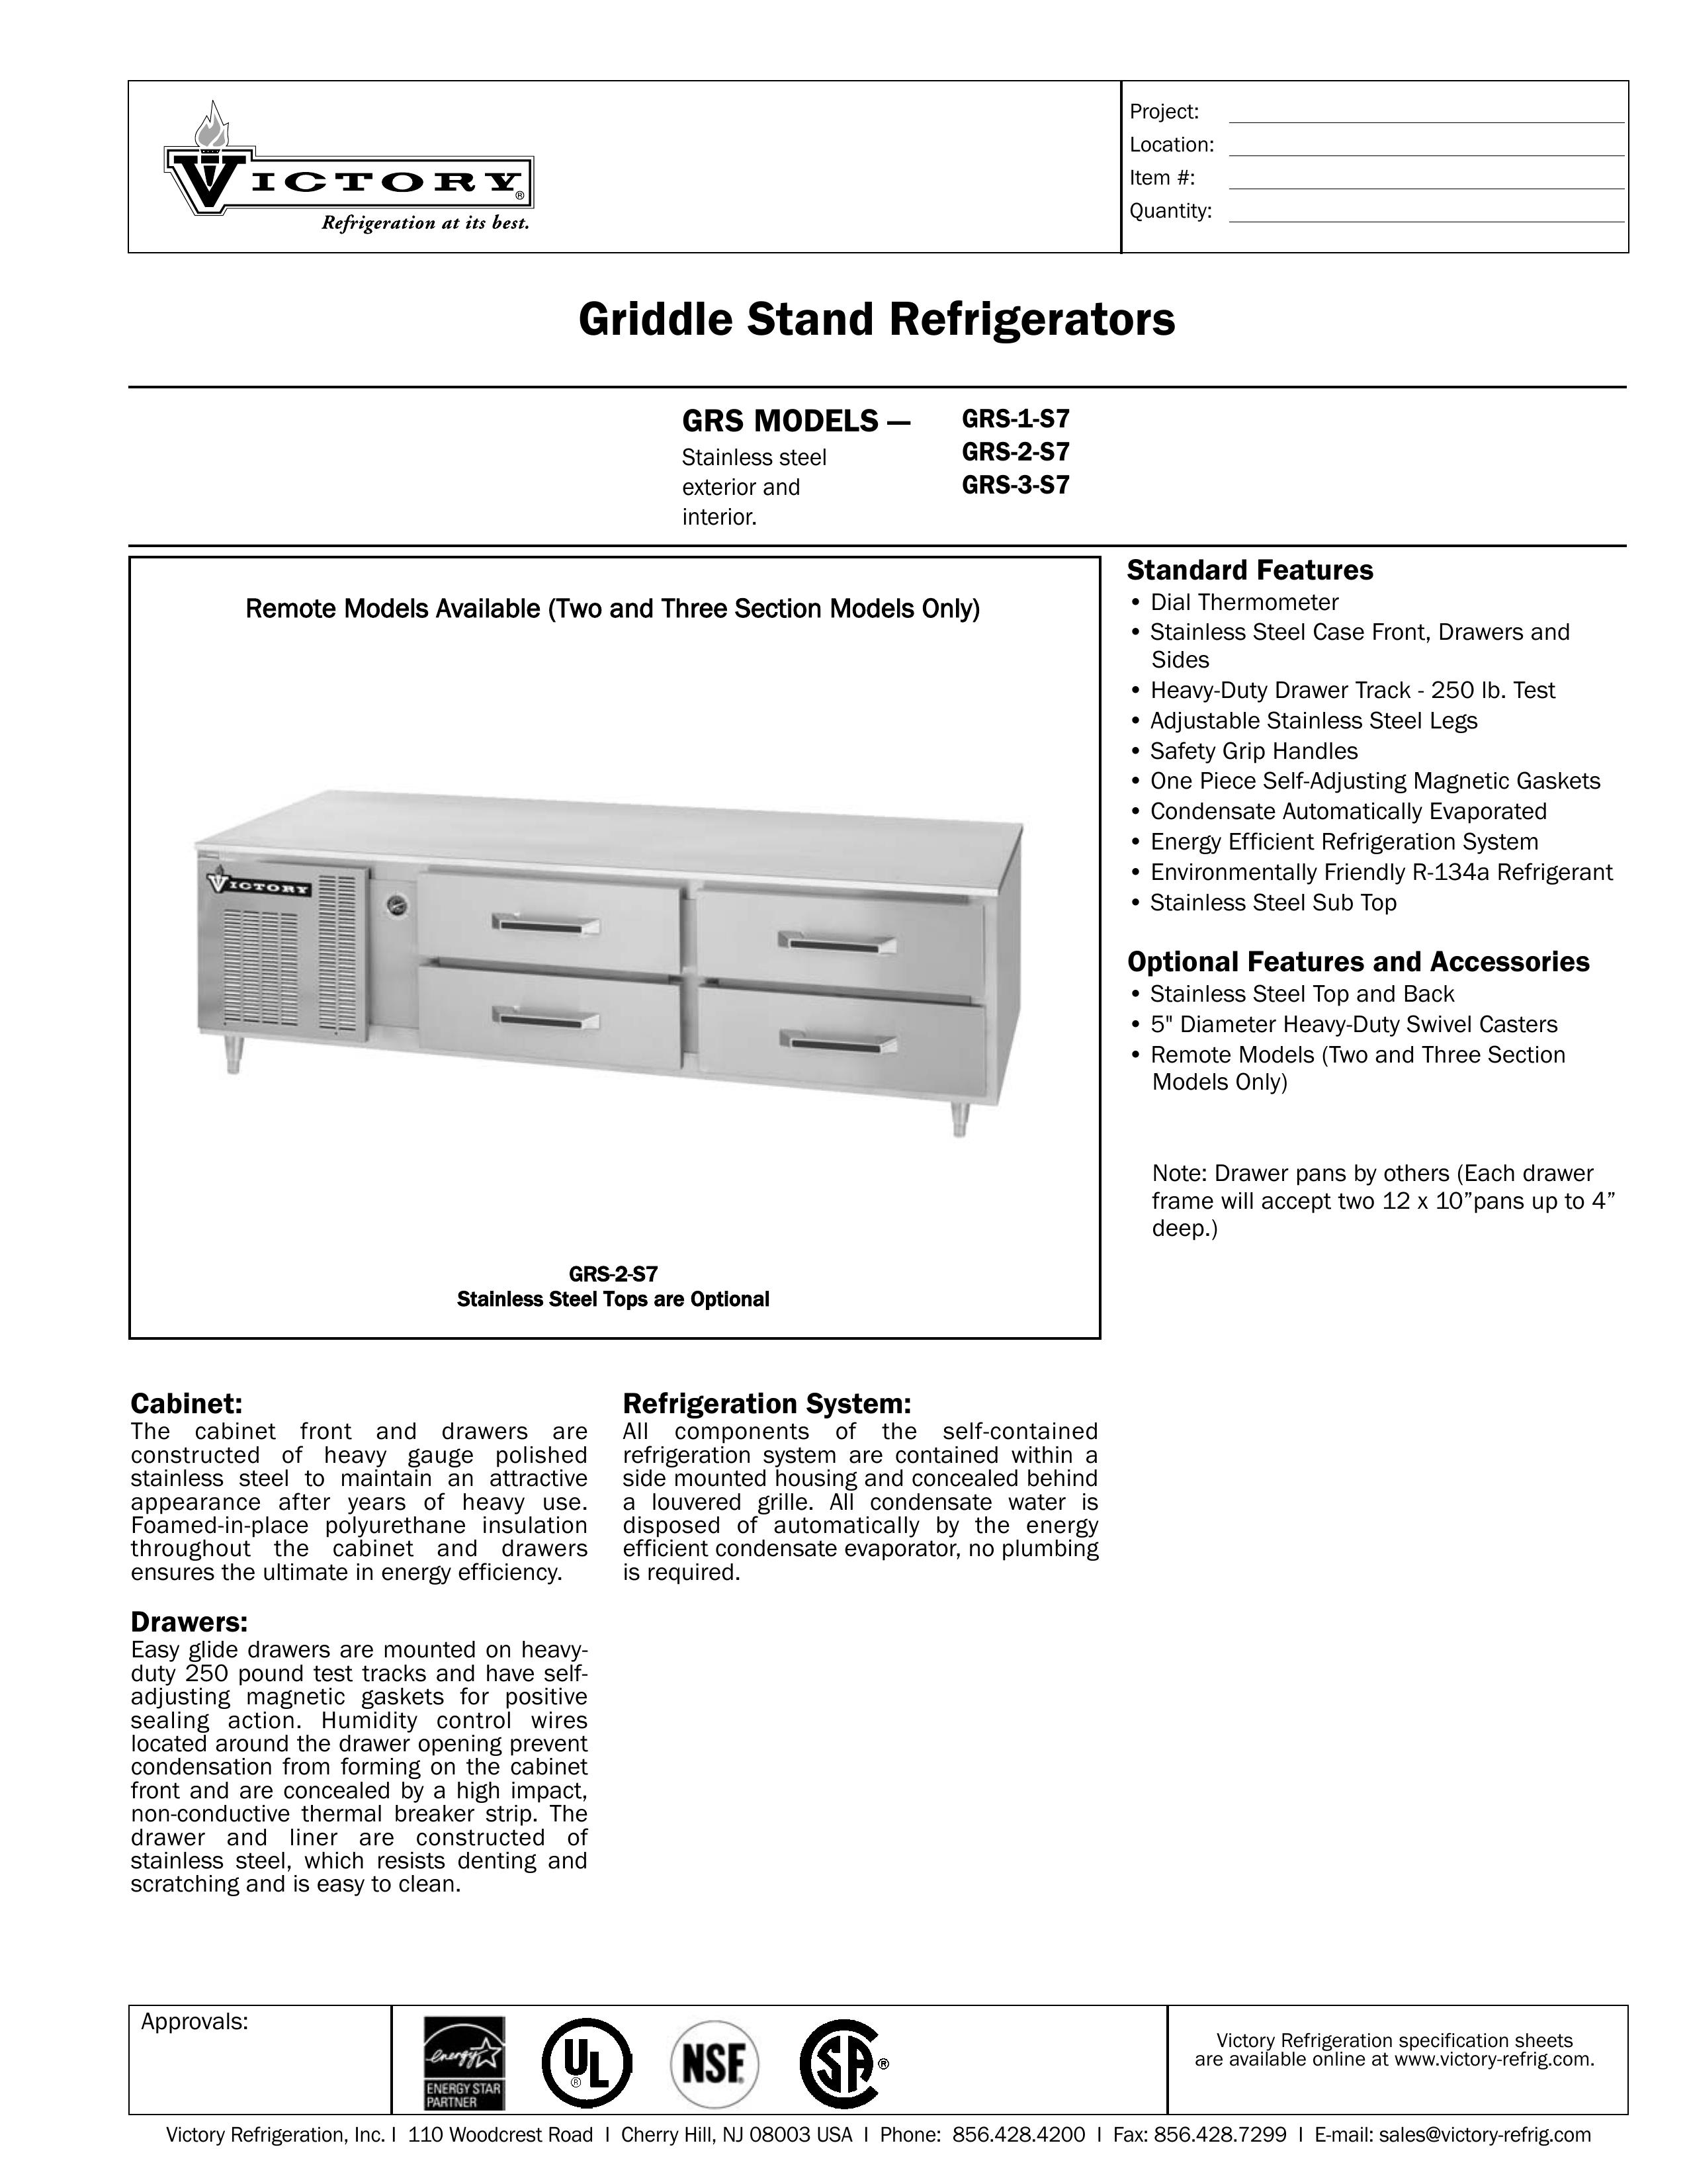 Victory Refrigeration GRS-2-S7 Refrigerator User Manual